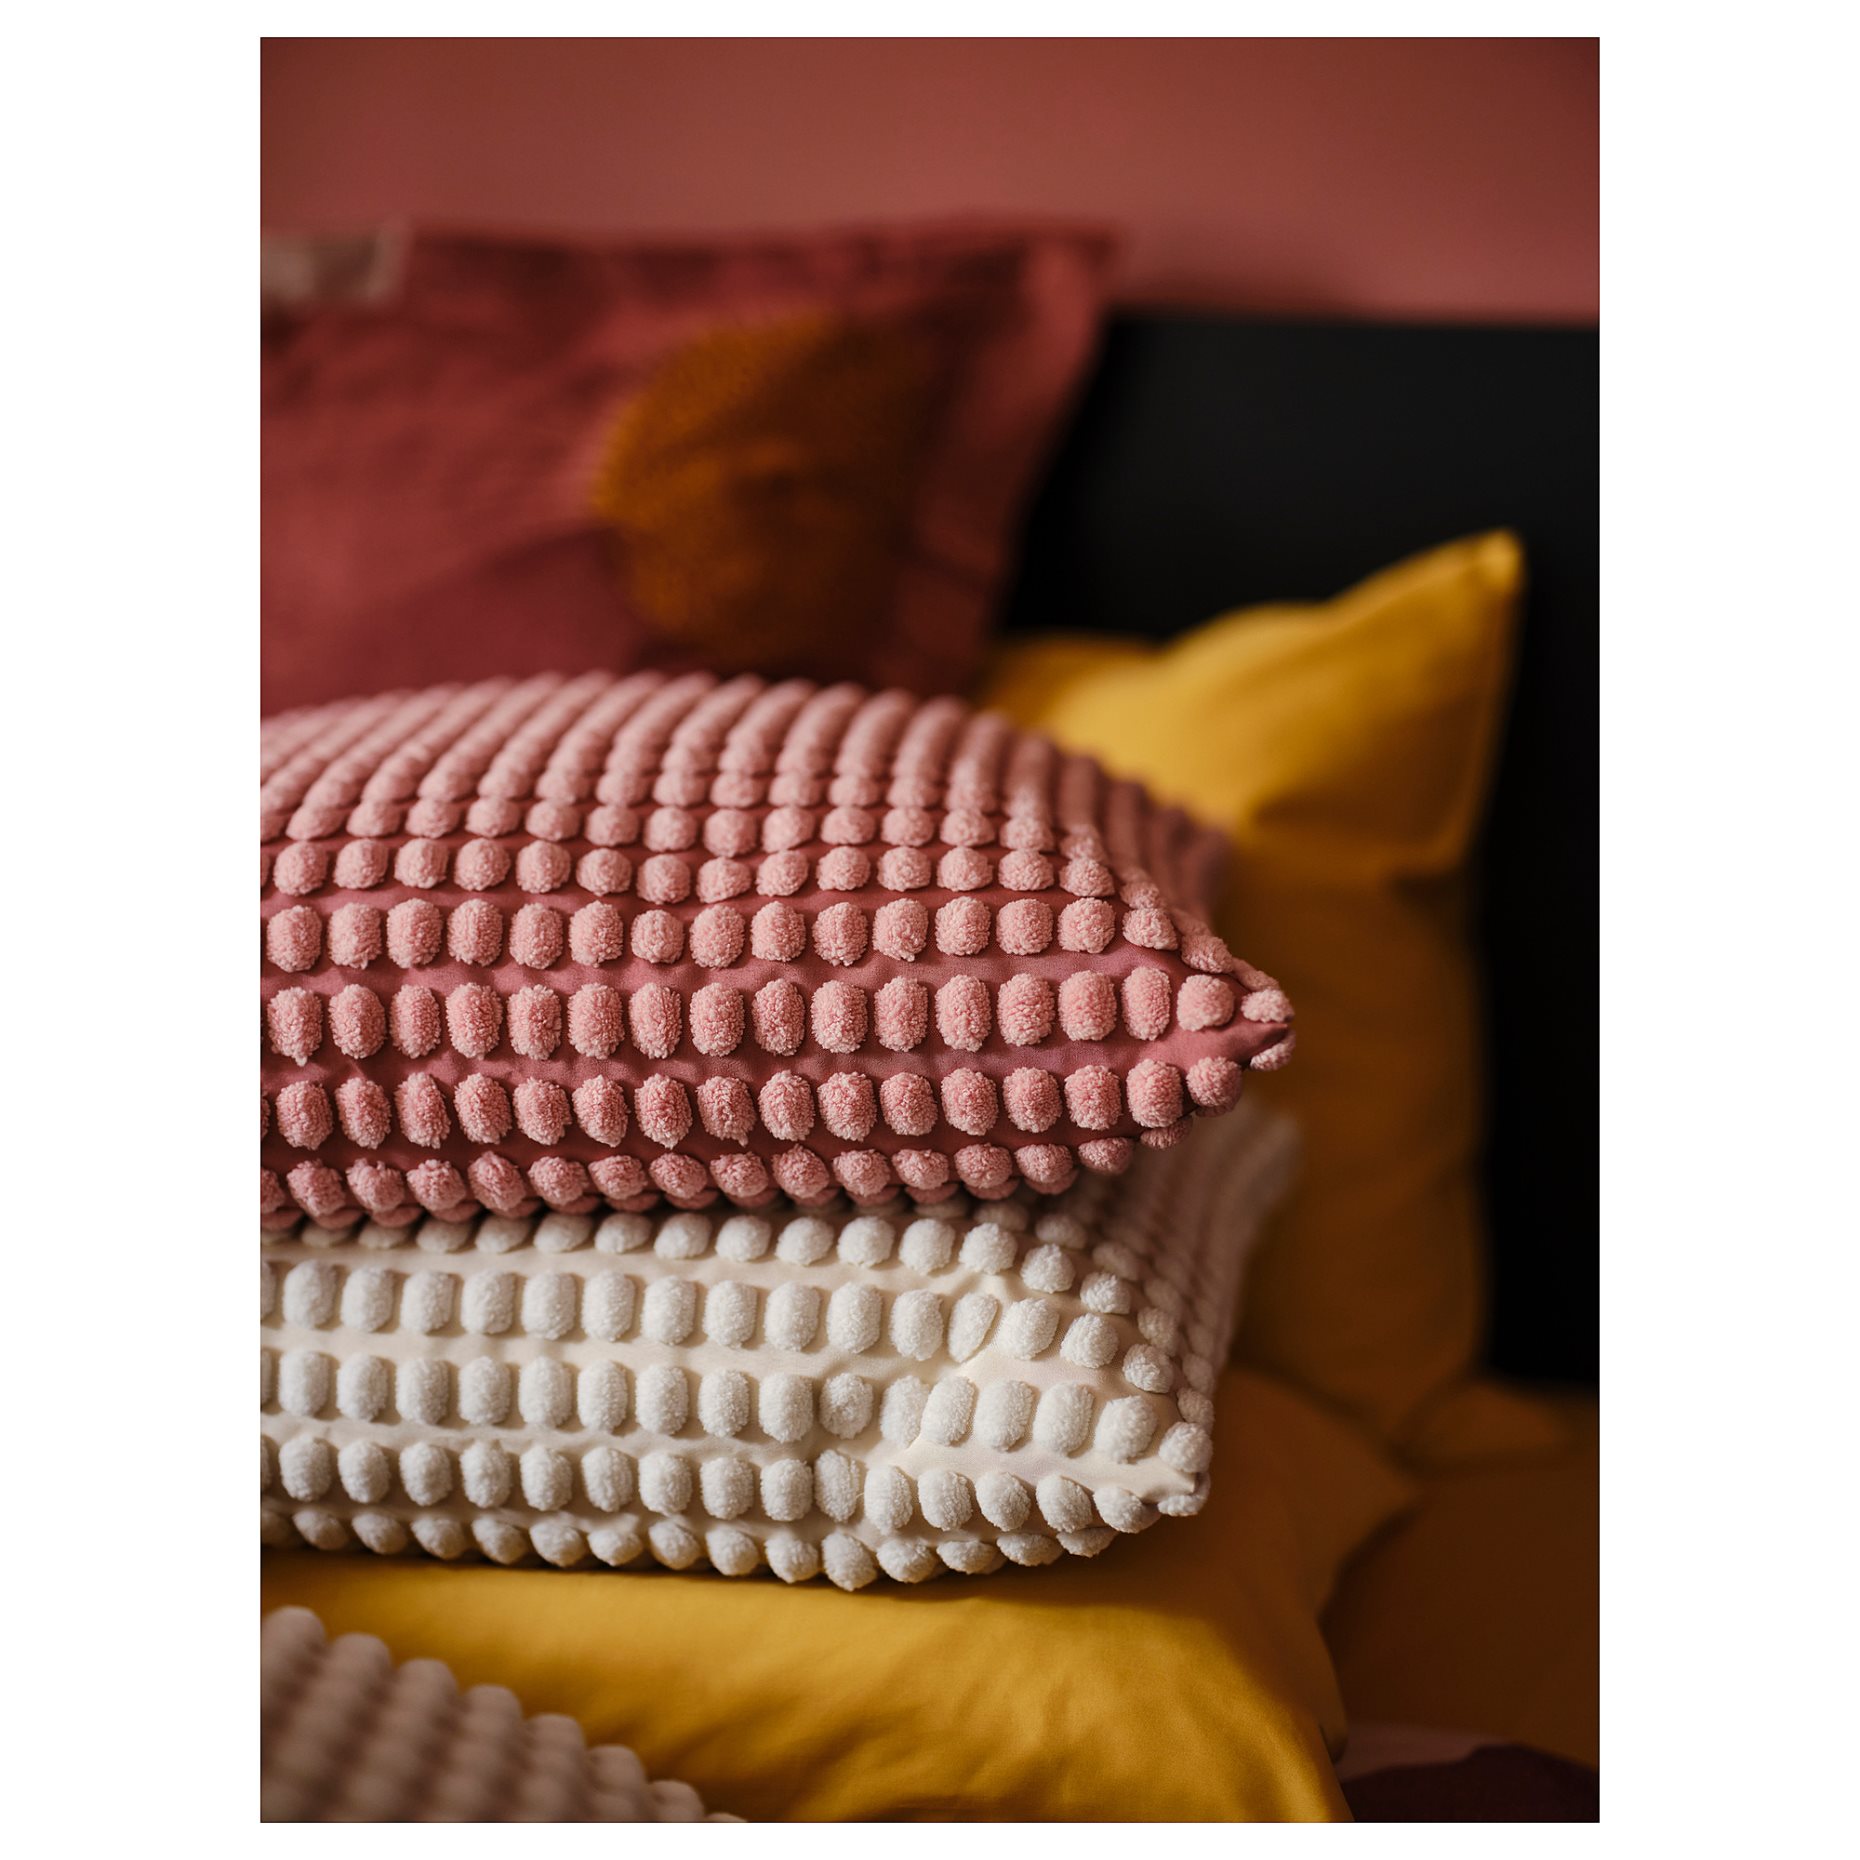 SVARTPOPPEL, cushion cover, 50x50 cm, 205.429.97